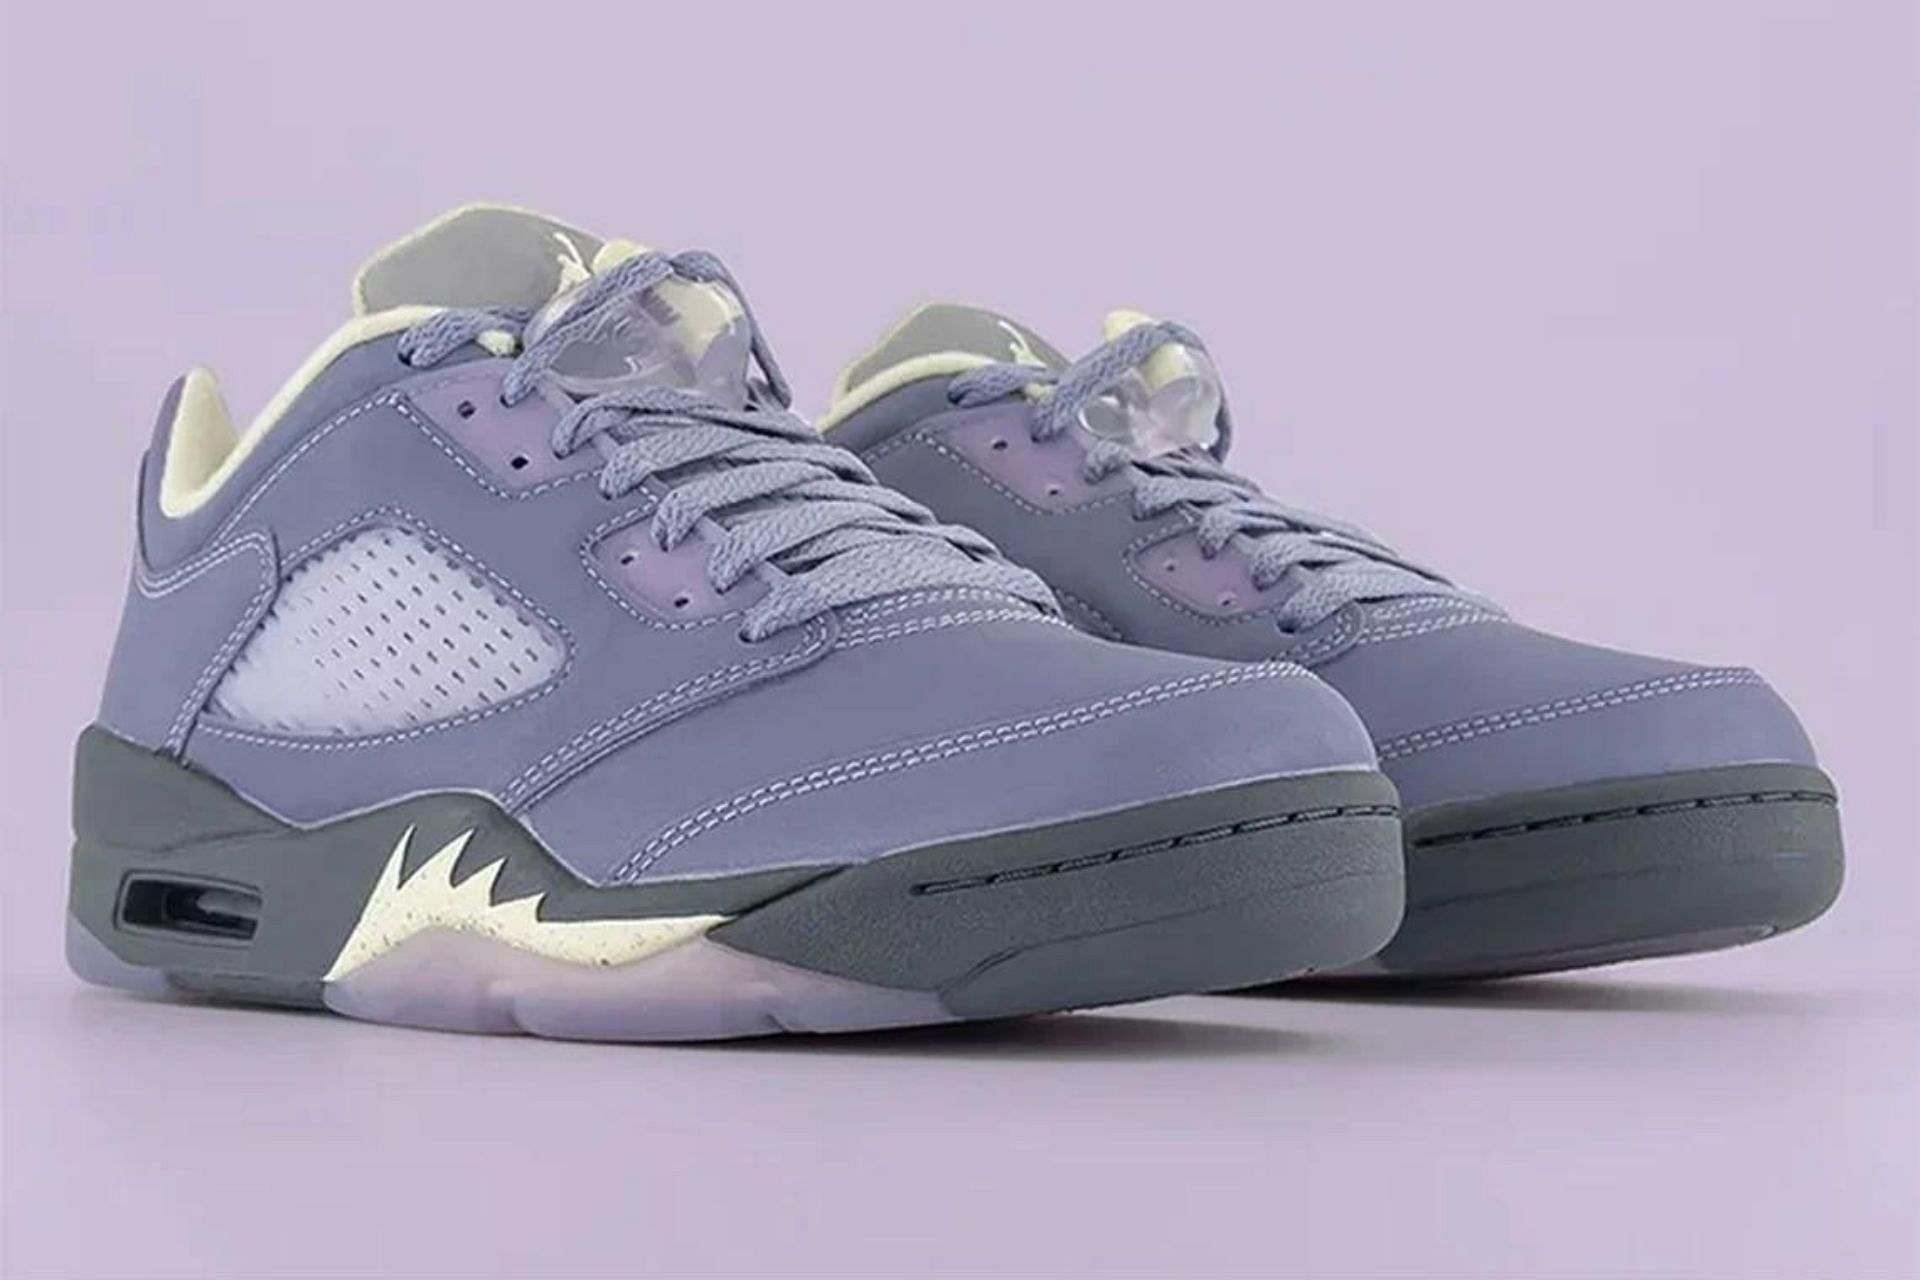 Air Jordan 5 Low Indigo Haze shoes (Image via Nike)